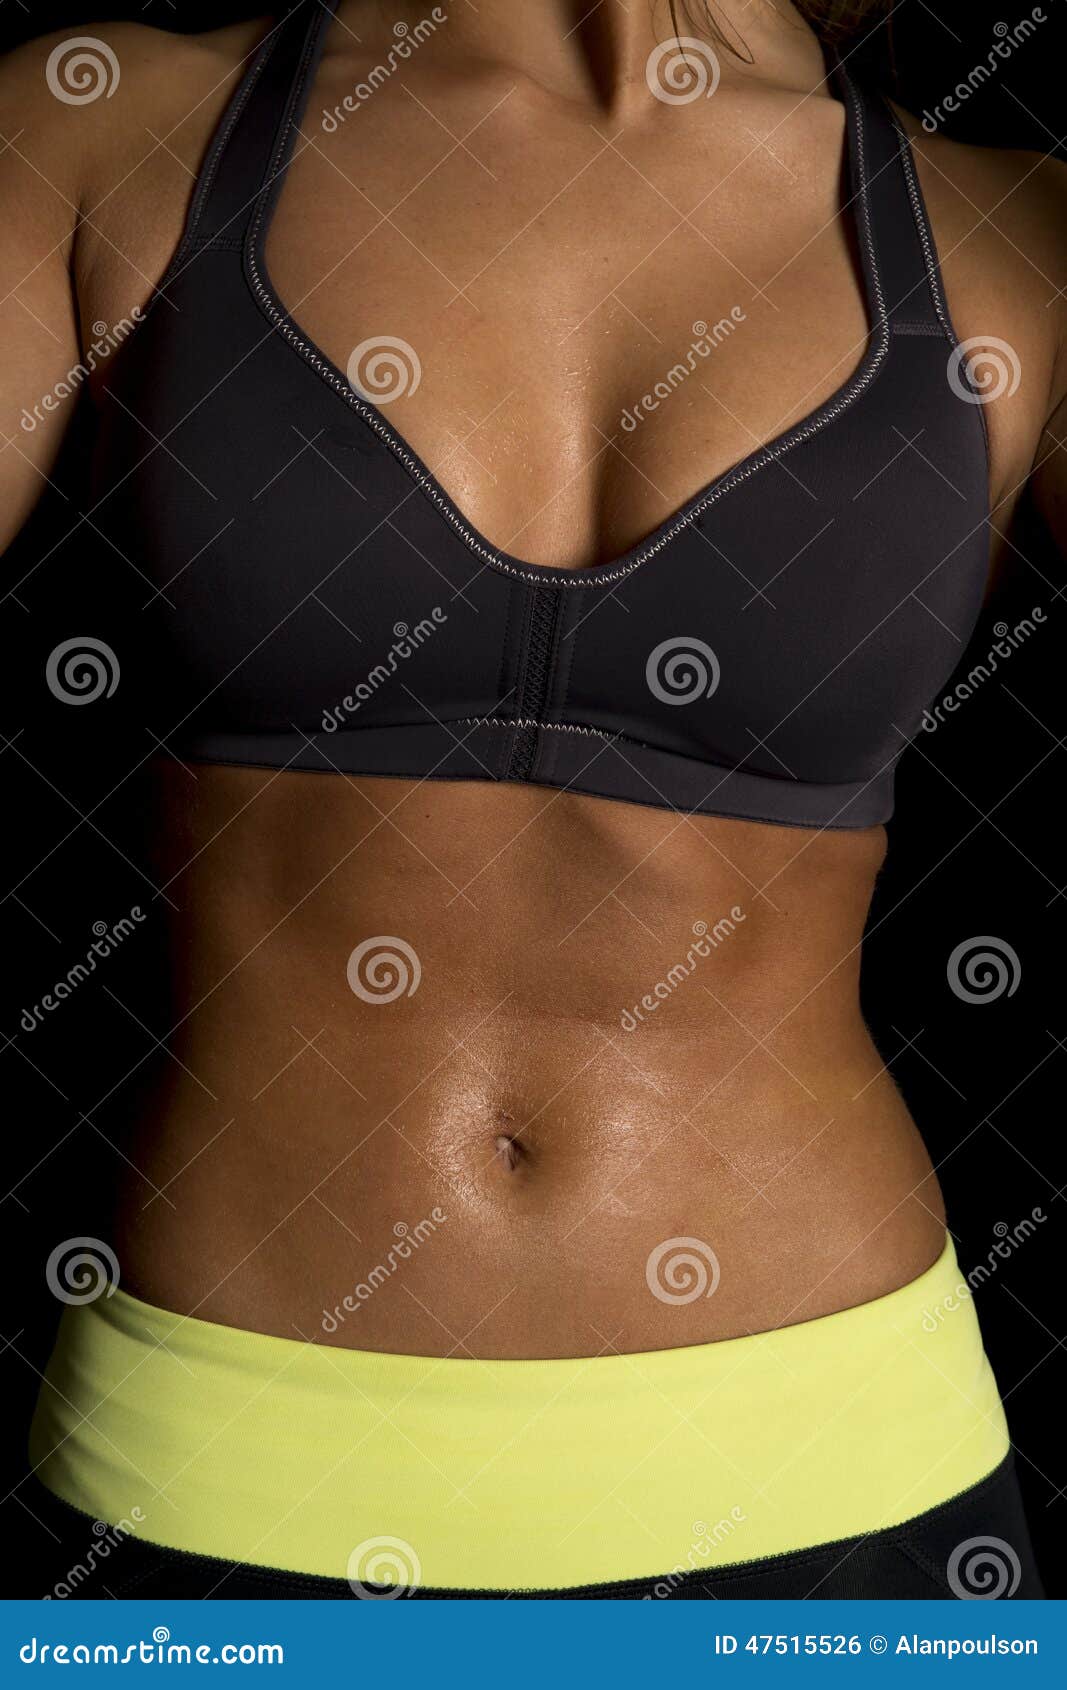 https://thumbs.dreamstime.com/z/woman-black-bra-body-close-stomach-shiny-up-s-sweating-47515526.jpg